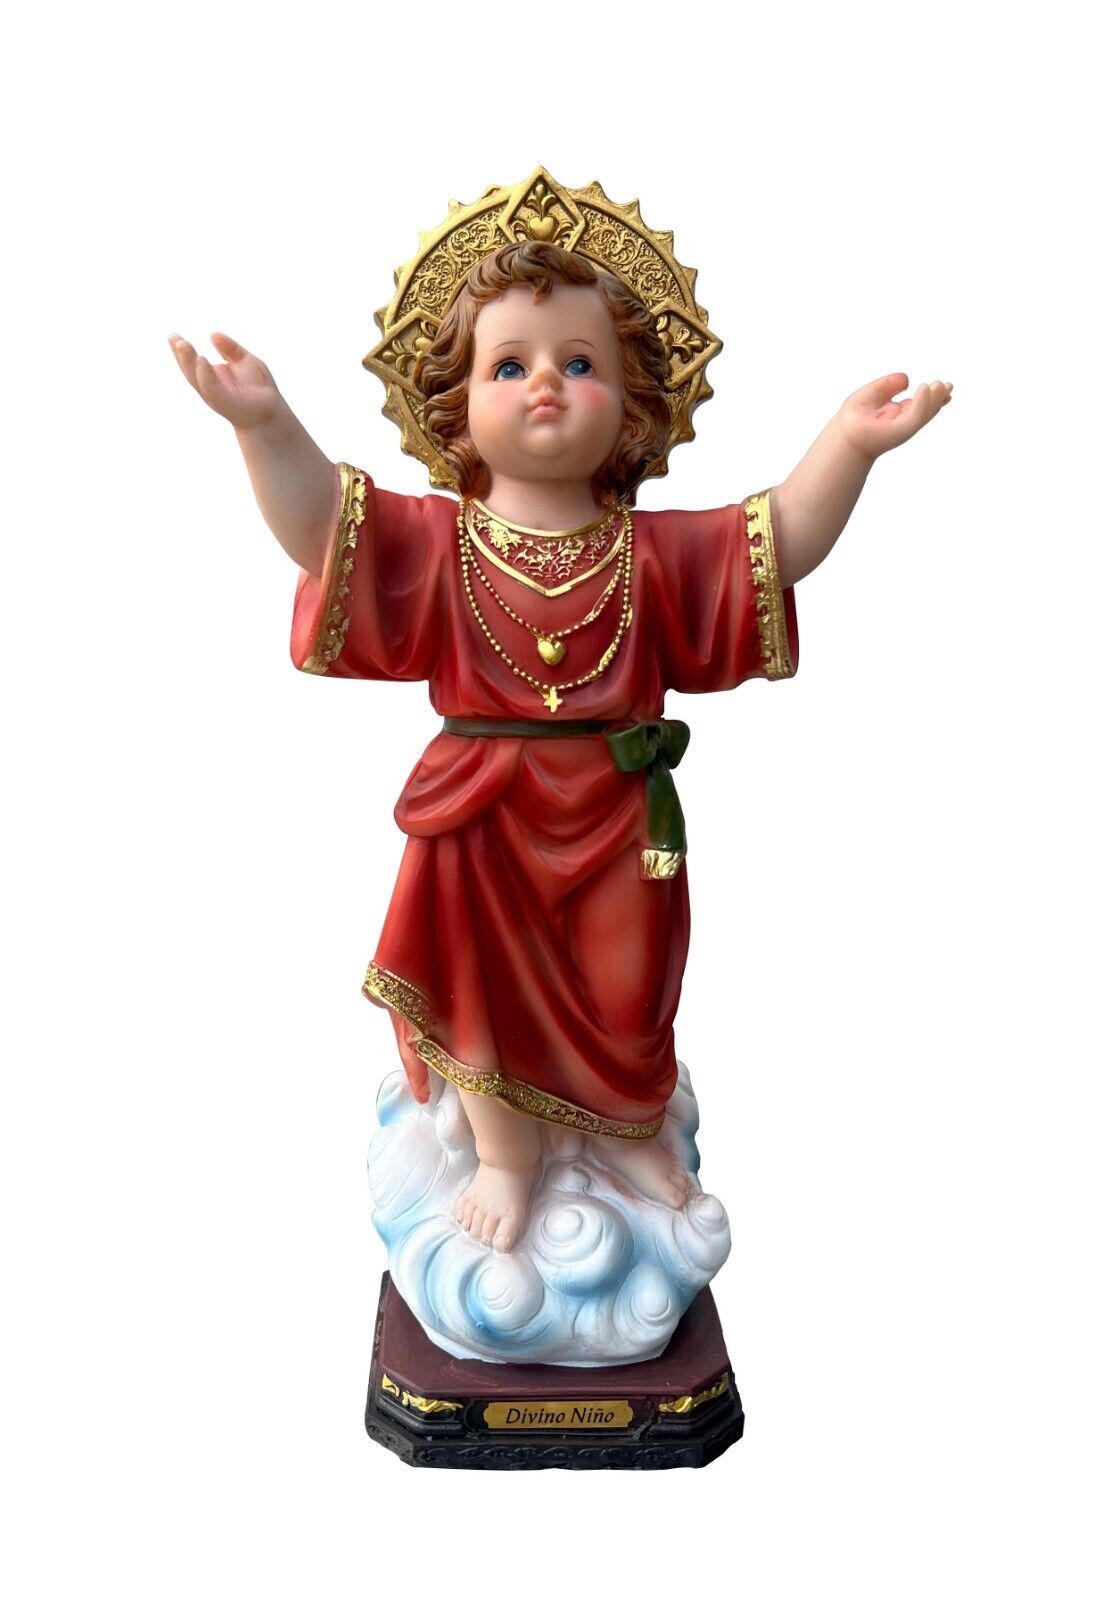 Divine Child Figurine Divino Nino Holy Child 12-Inch Religious Statue Resin 